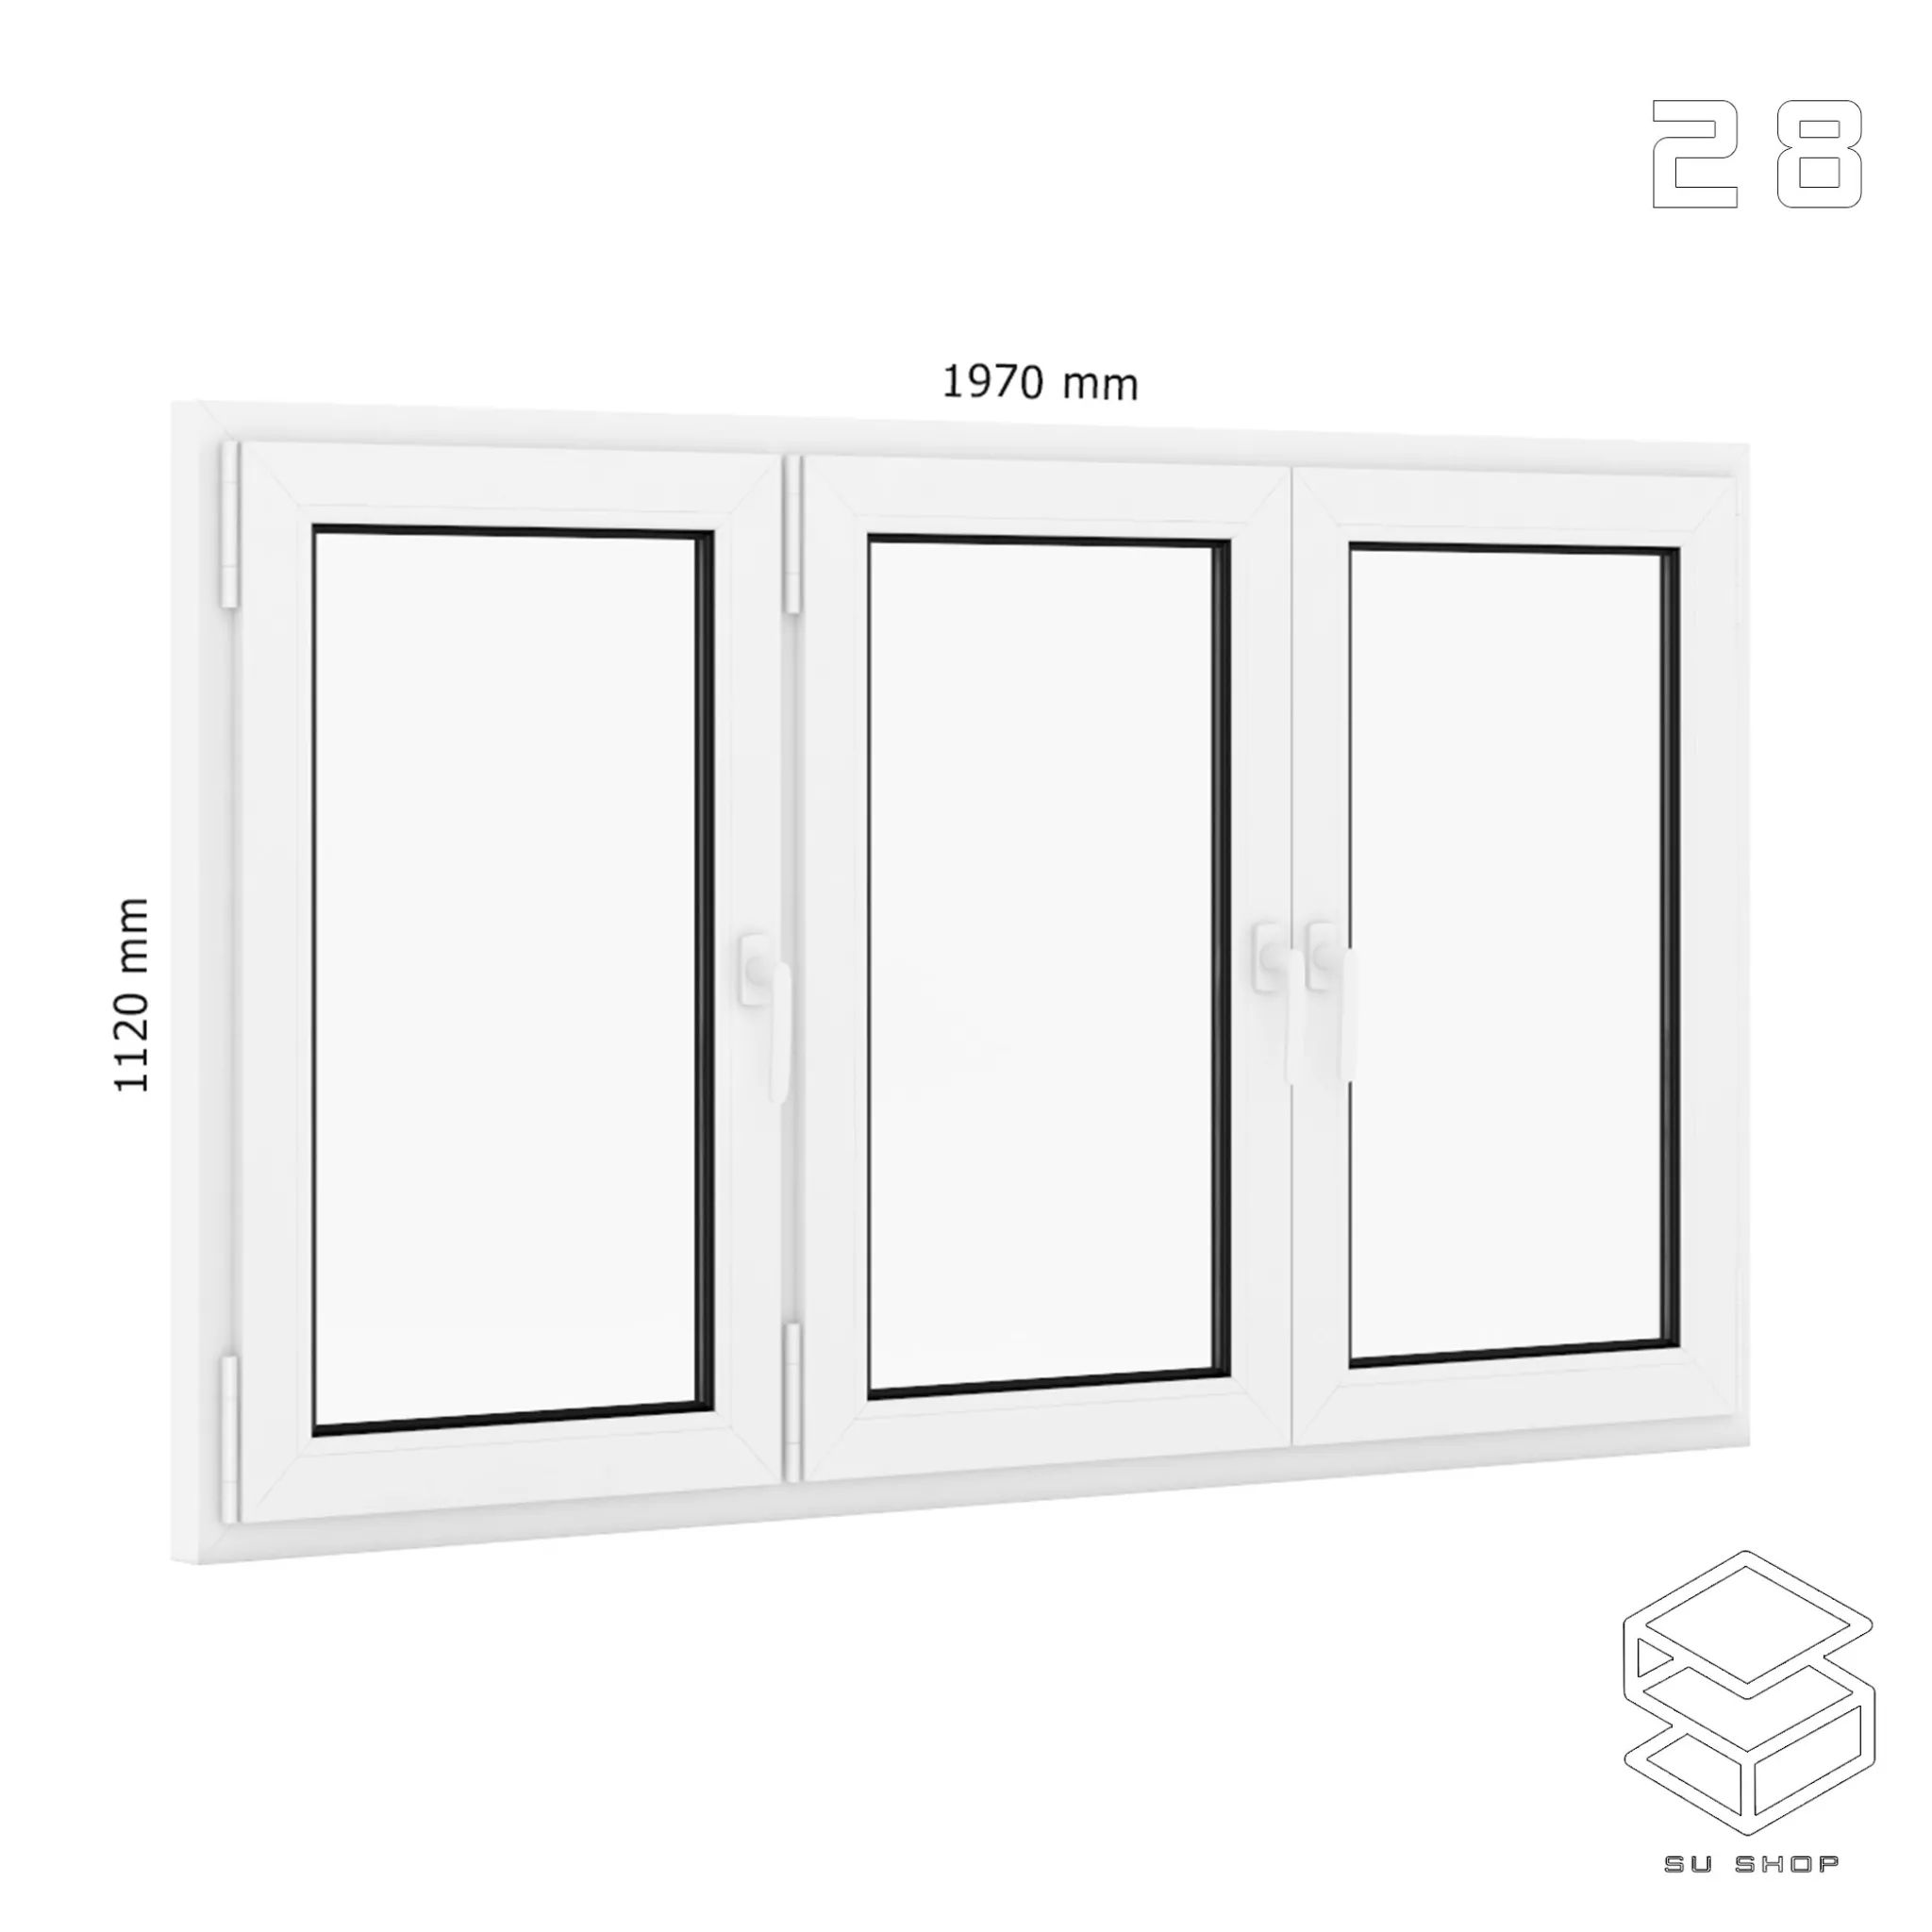 MODERN WINDOWS - SKETCHUP 3D MODEL - VRAY OR ENSCAPE - ID16768